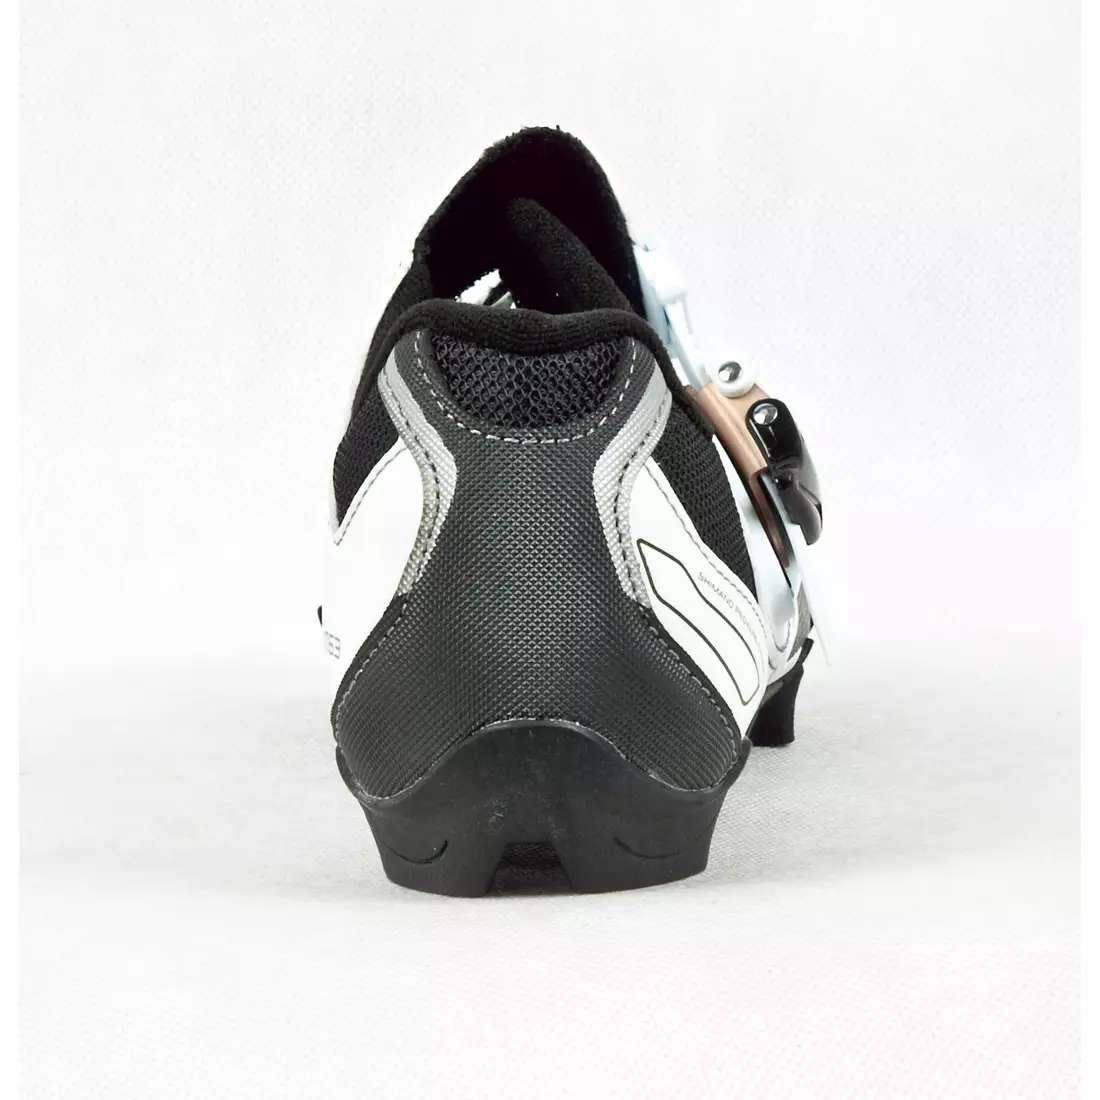 SHIMANO SH-WM63 - dámska cyklistická obuv, farba: biela